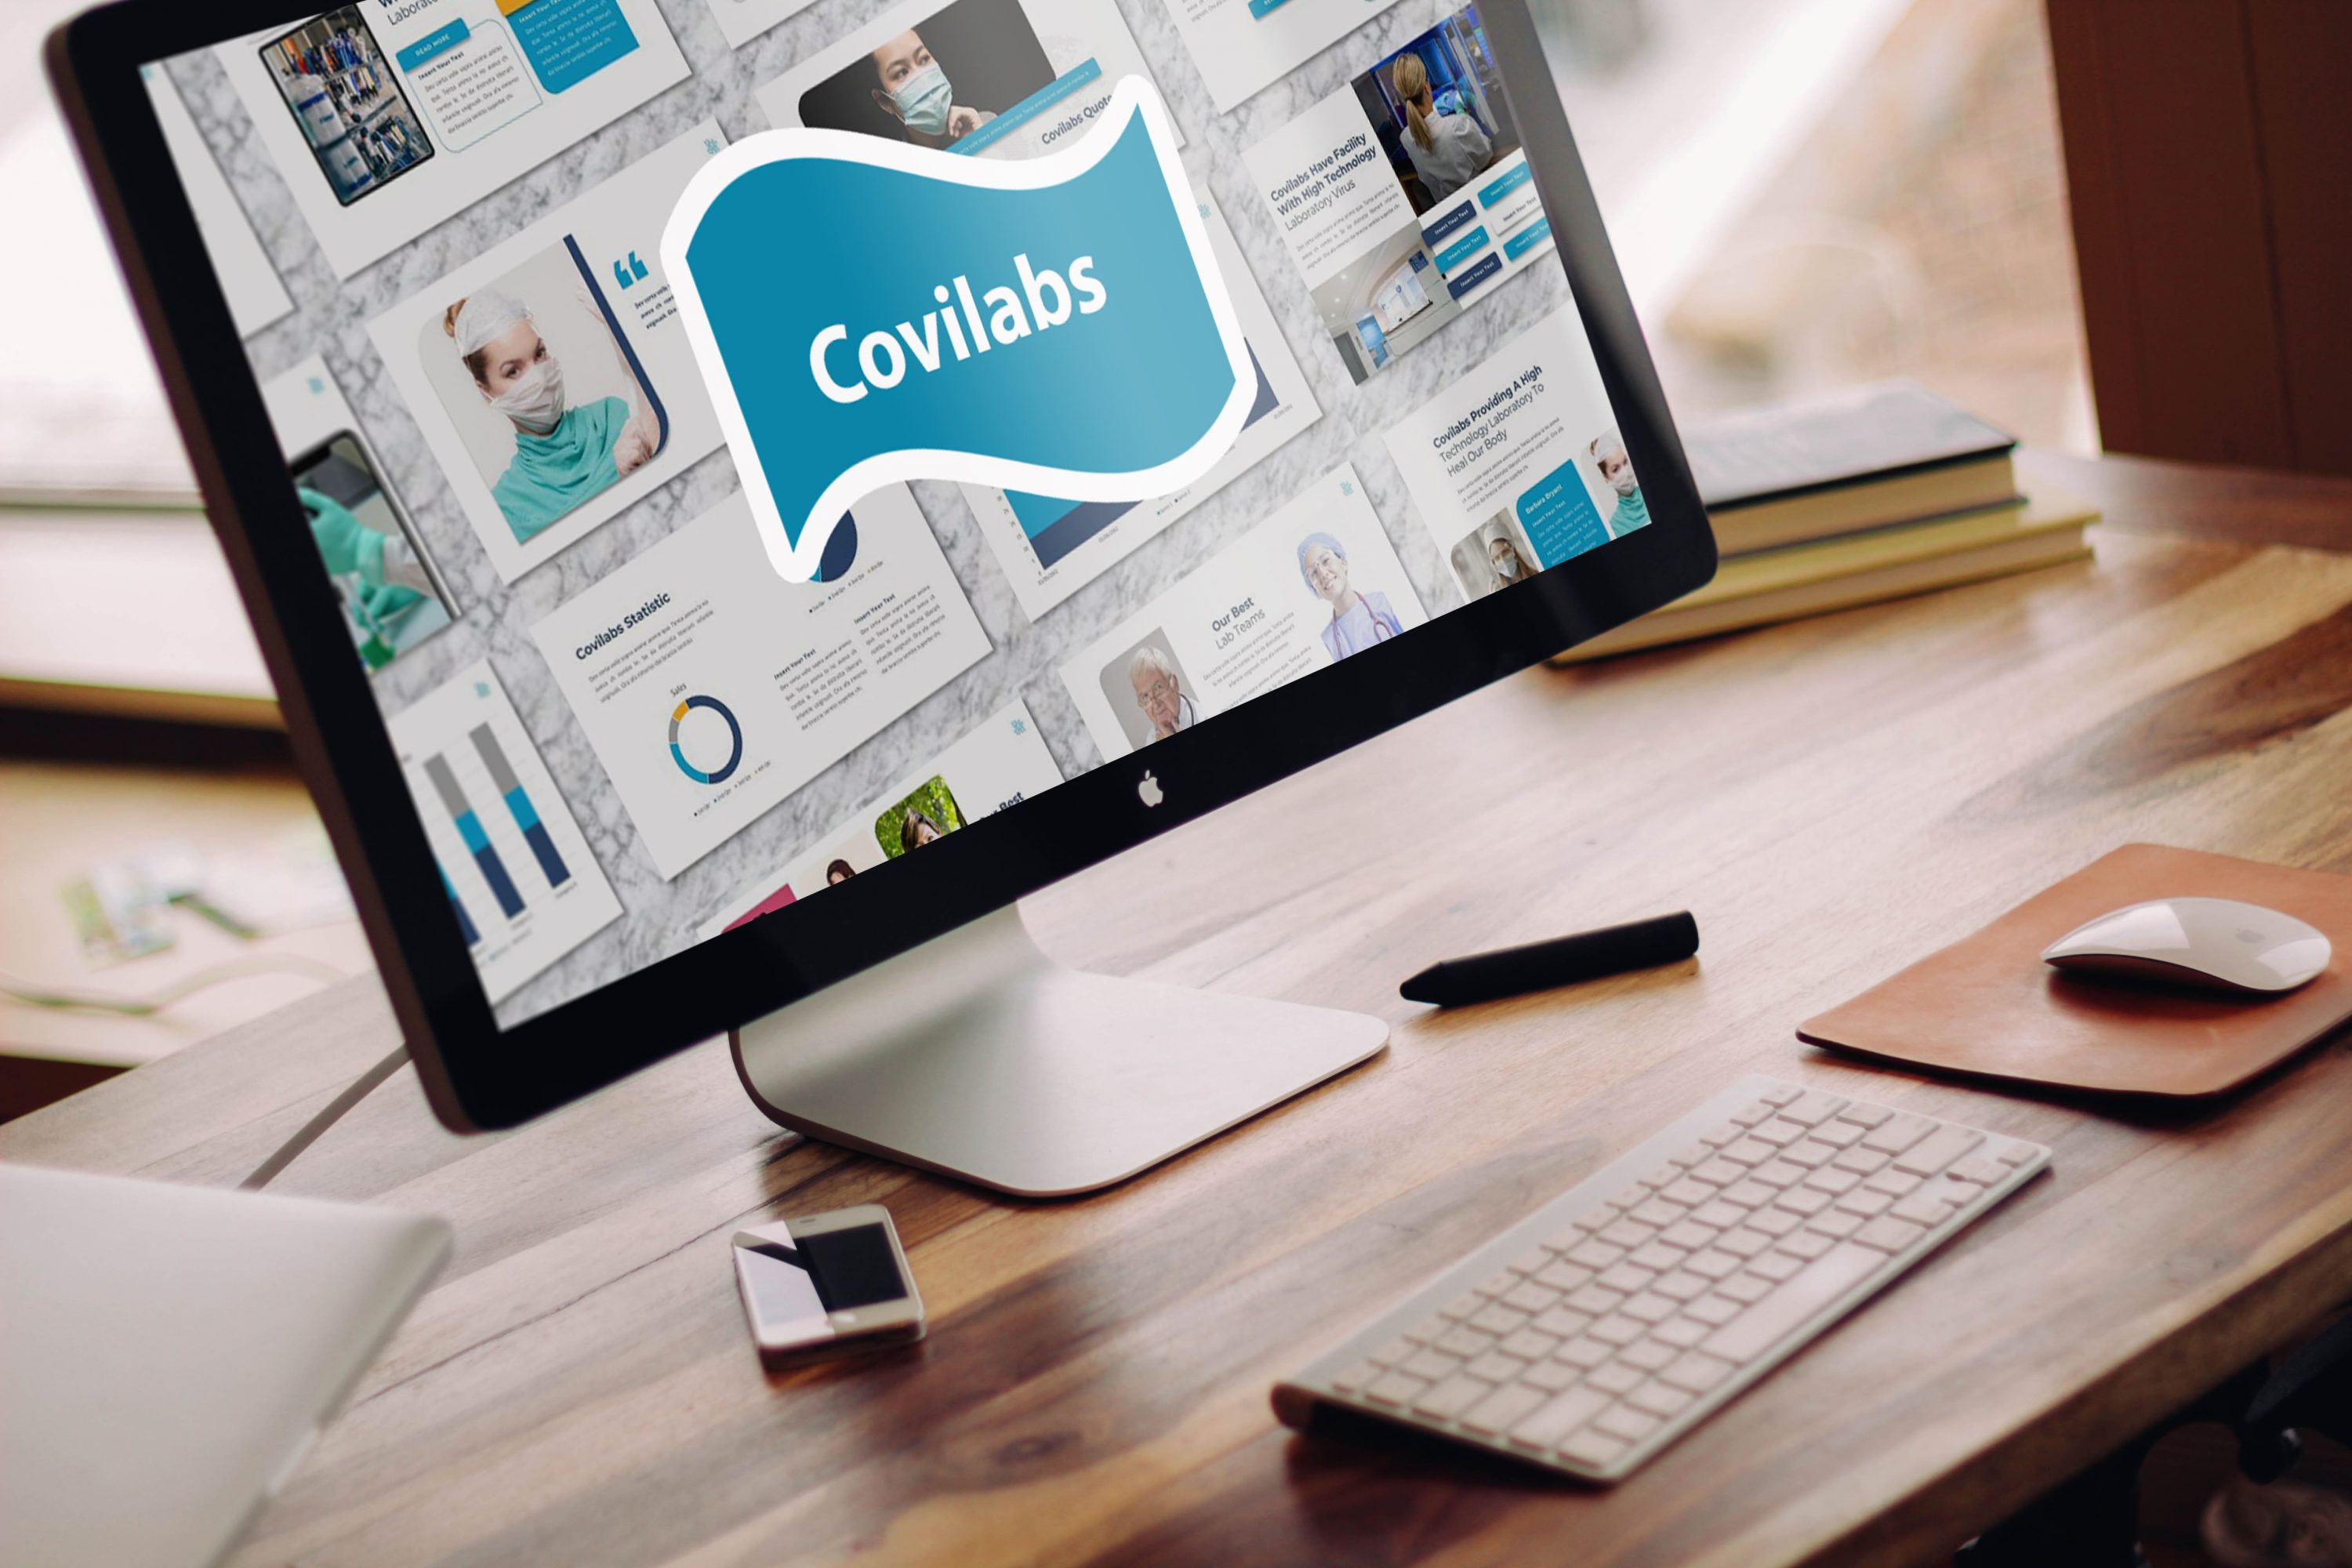 Covilabs - Covid Medical Powerpoint by MasterBundles Desktop preview mockup image.